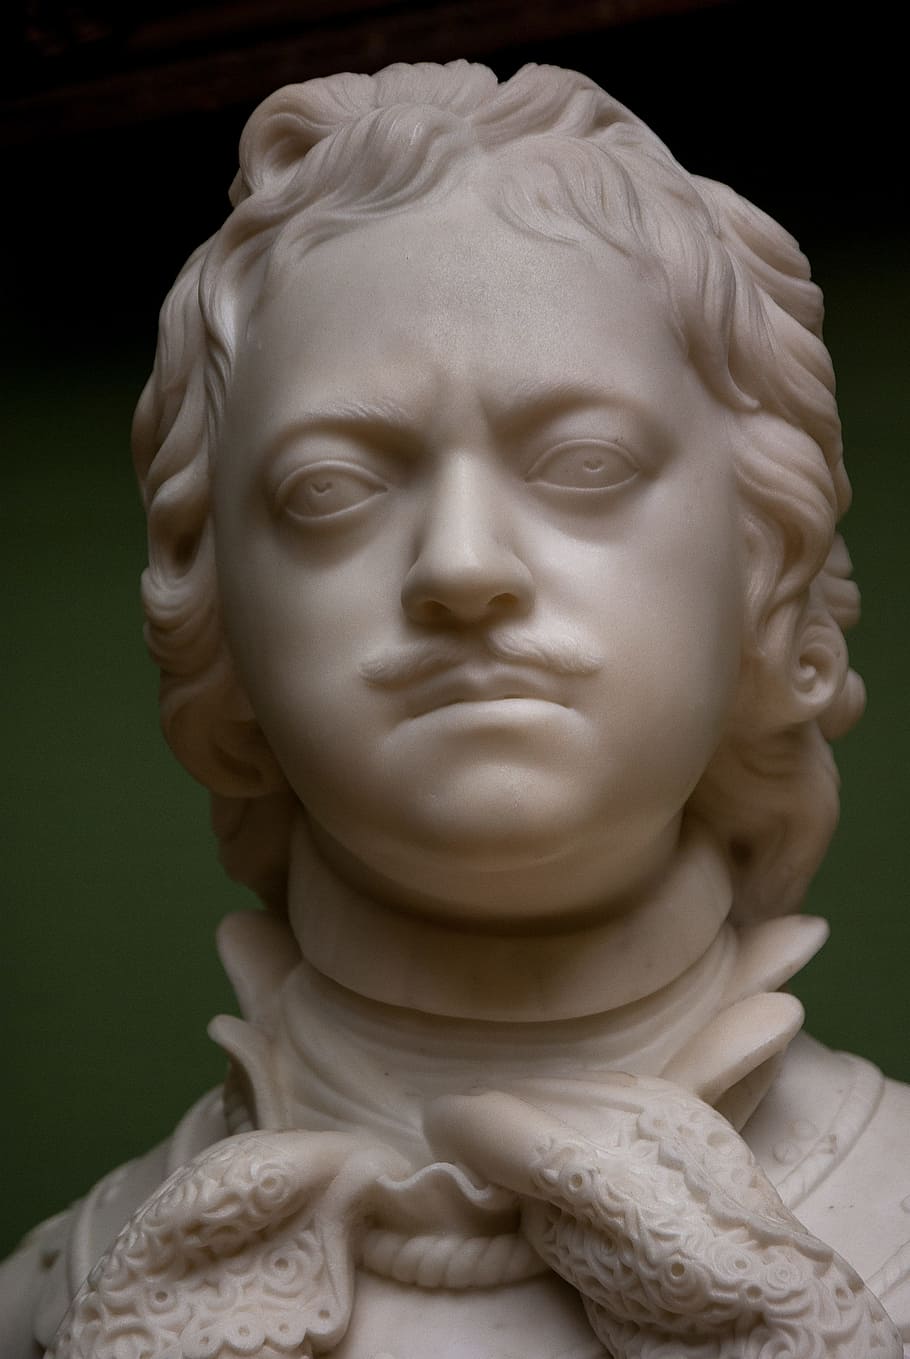 Russia, Tsar, Pierre-Le-Grand, Sculpture, portrait, statue, marble, human body part, human face, close-up